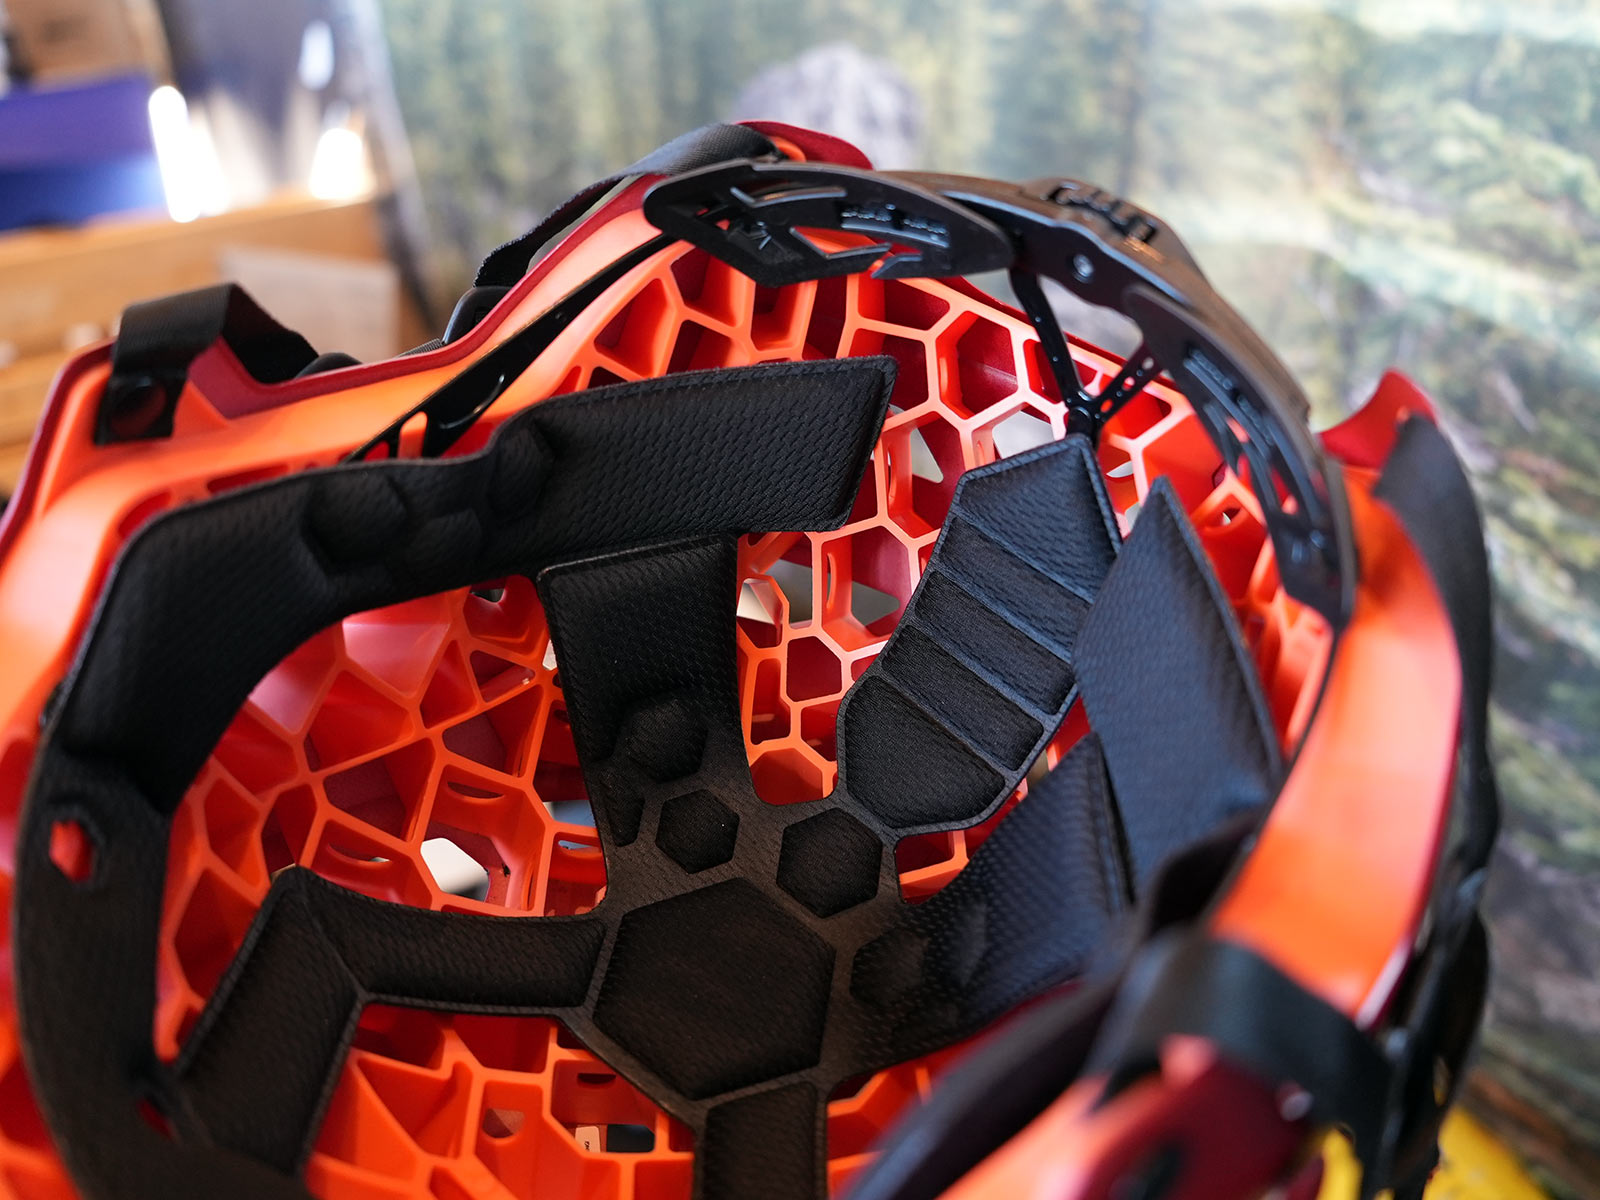 internal look at hexagonal padding structure of 720 bike helmets